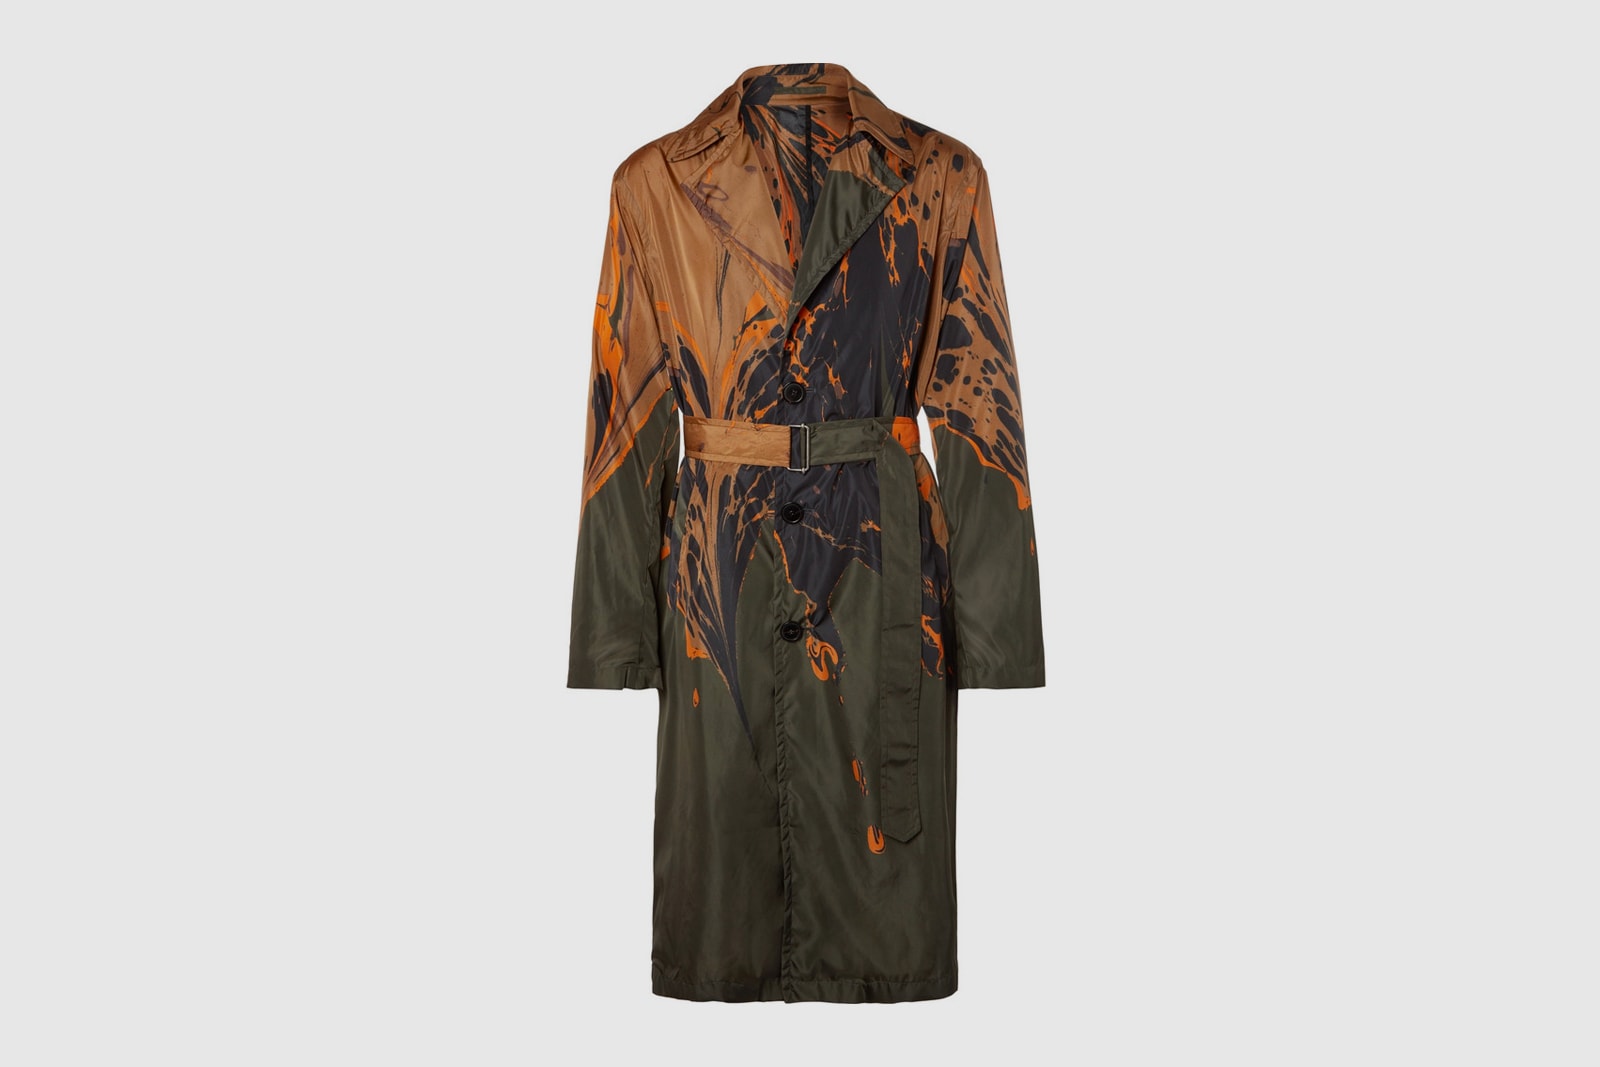 Dries Van Noten Fall Winter 2018 Ebru Shell Coat mr porter exclusive release info paris fashion week trench coat